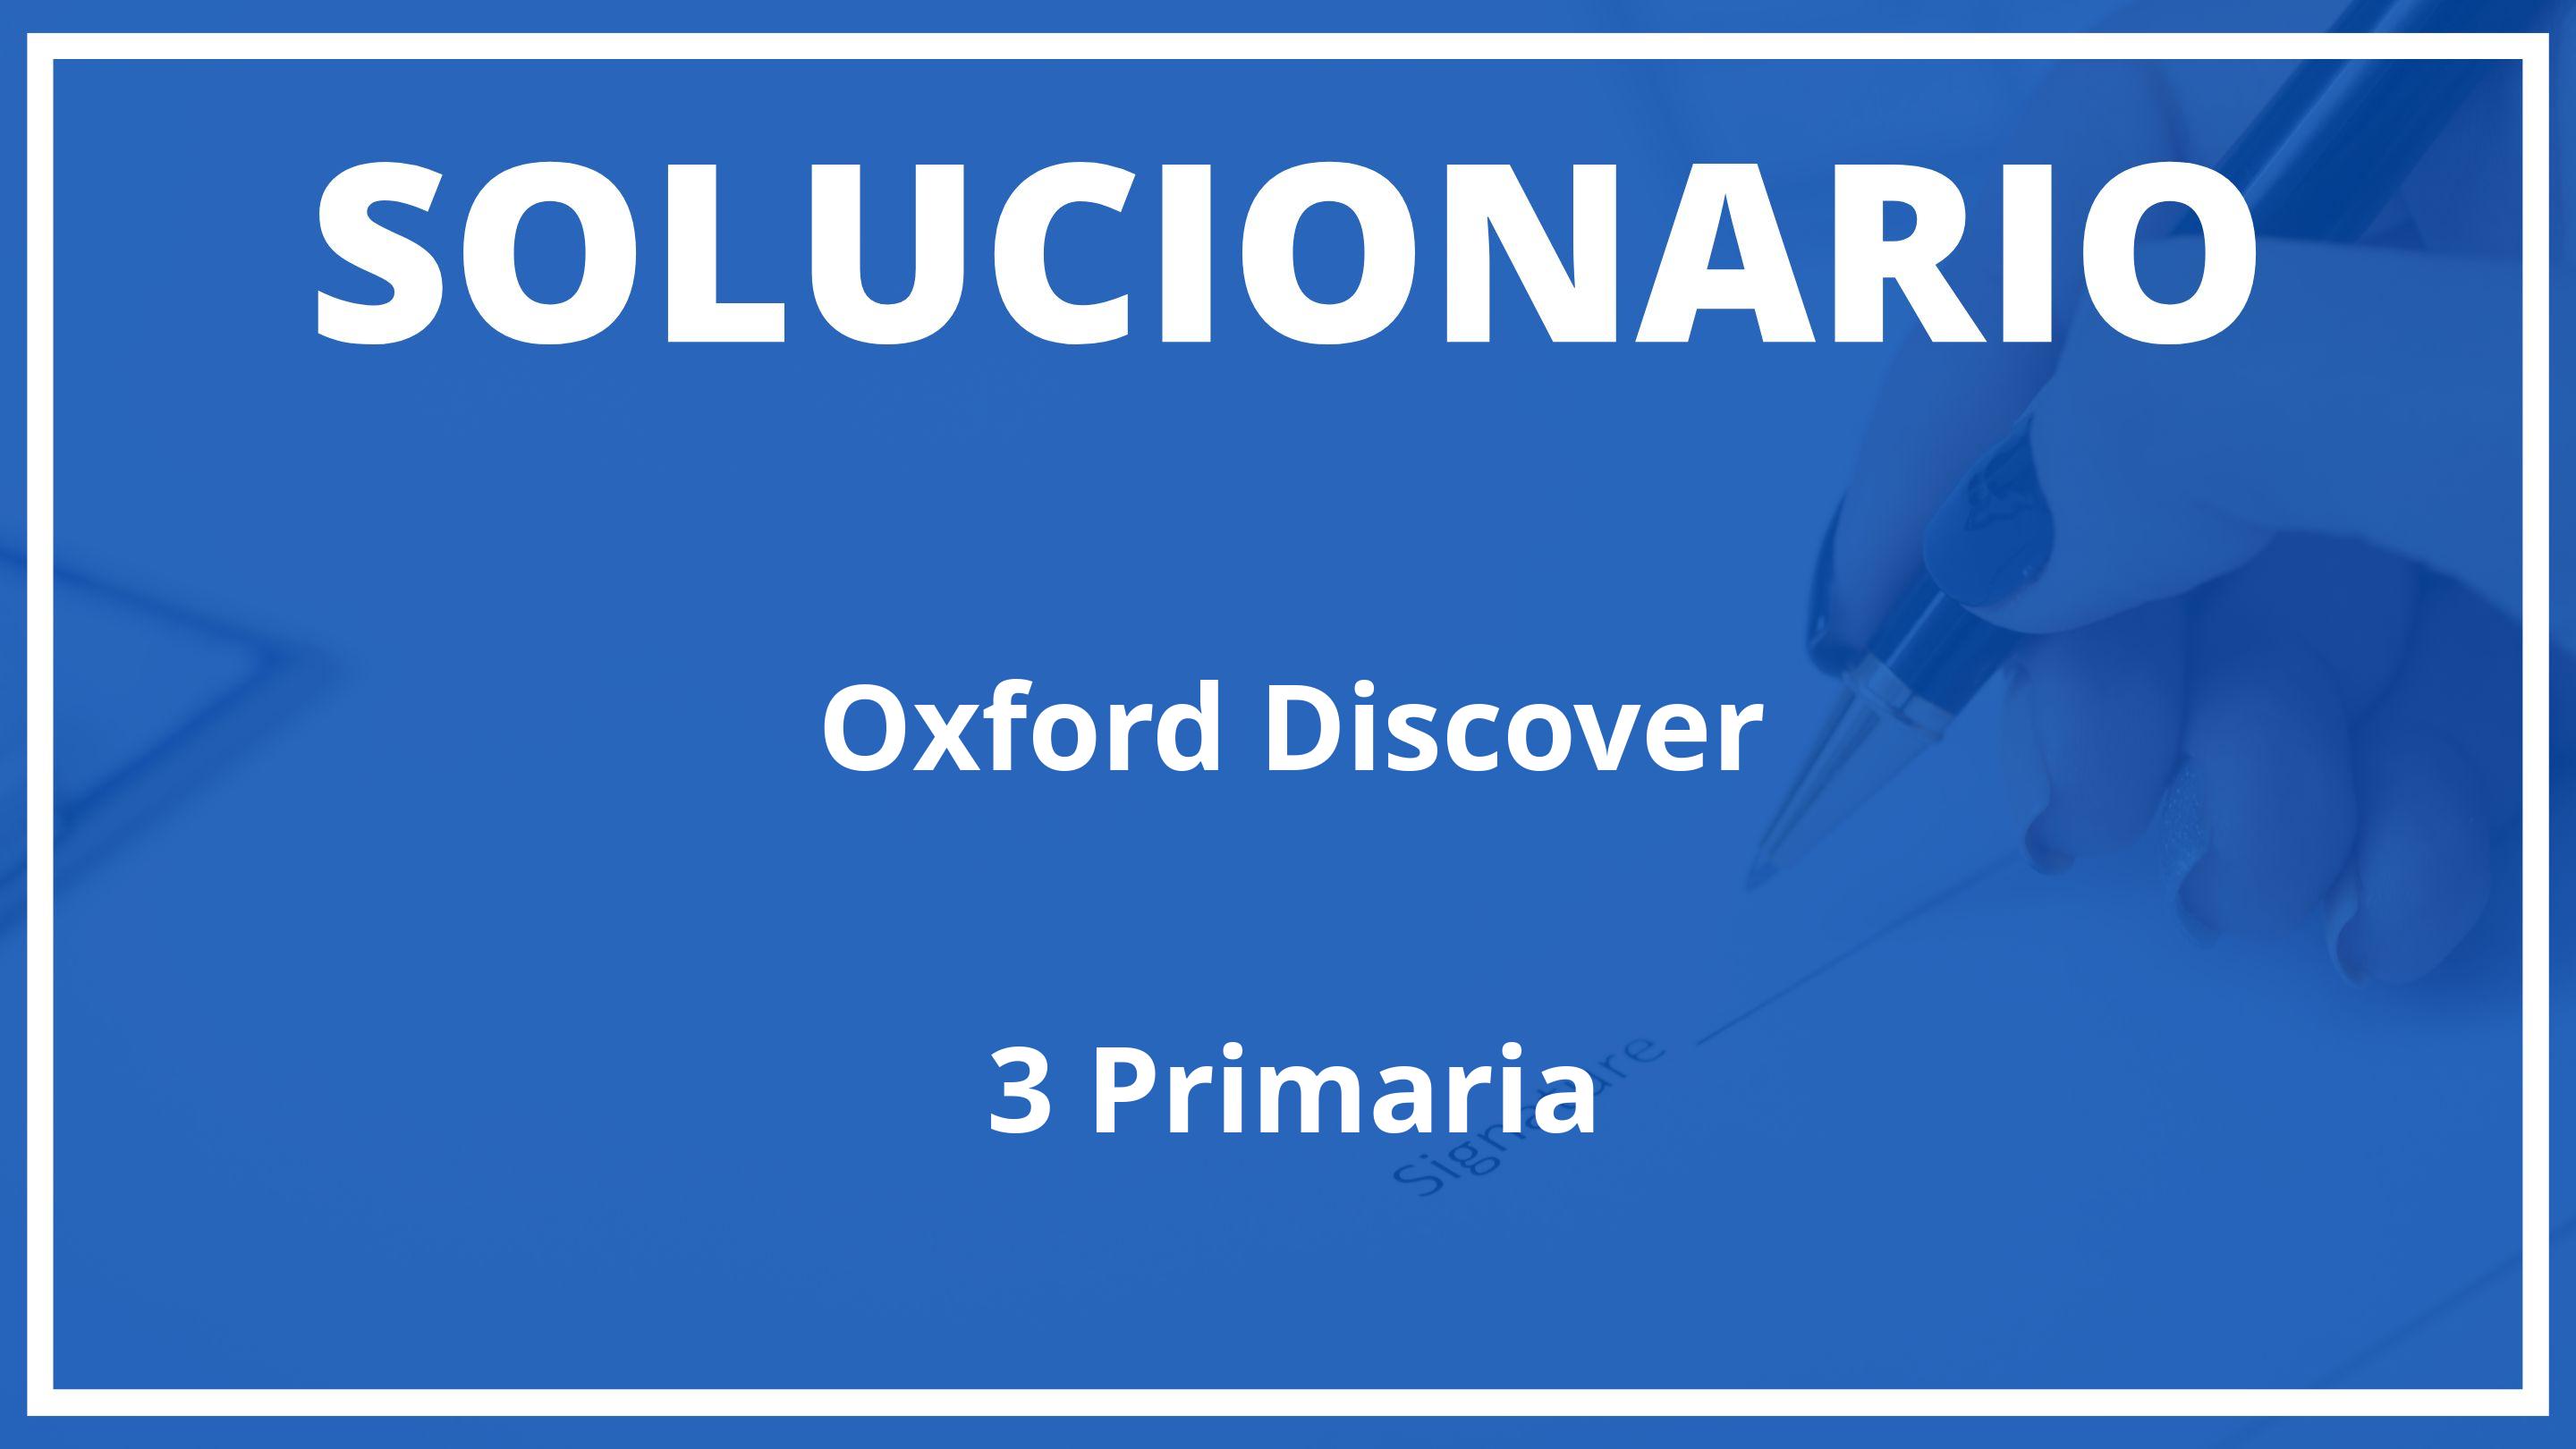 Solucionario Oxford Discover  Oxford 3 Primaria